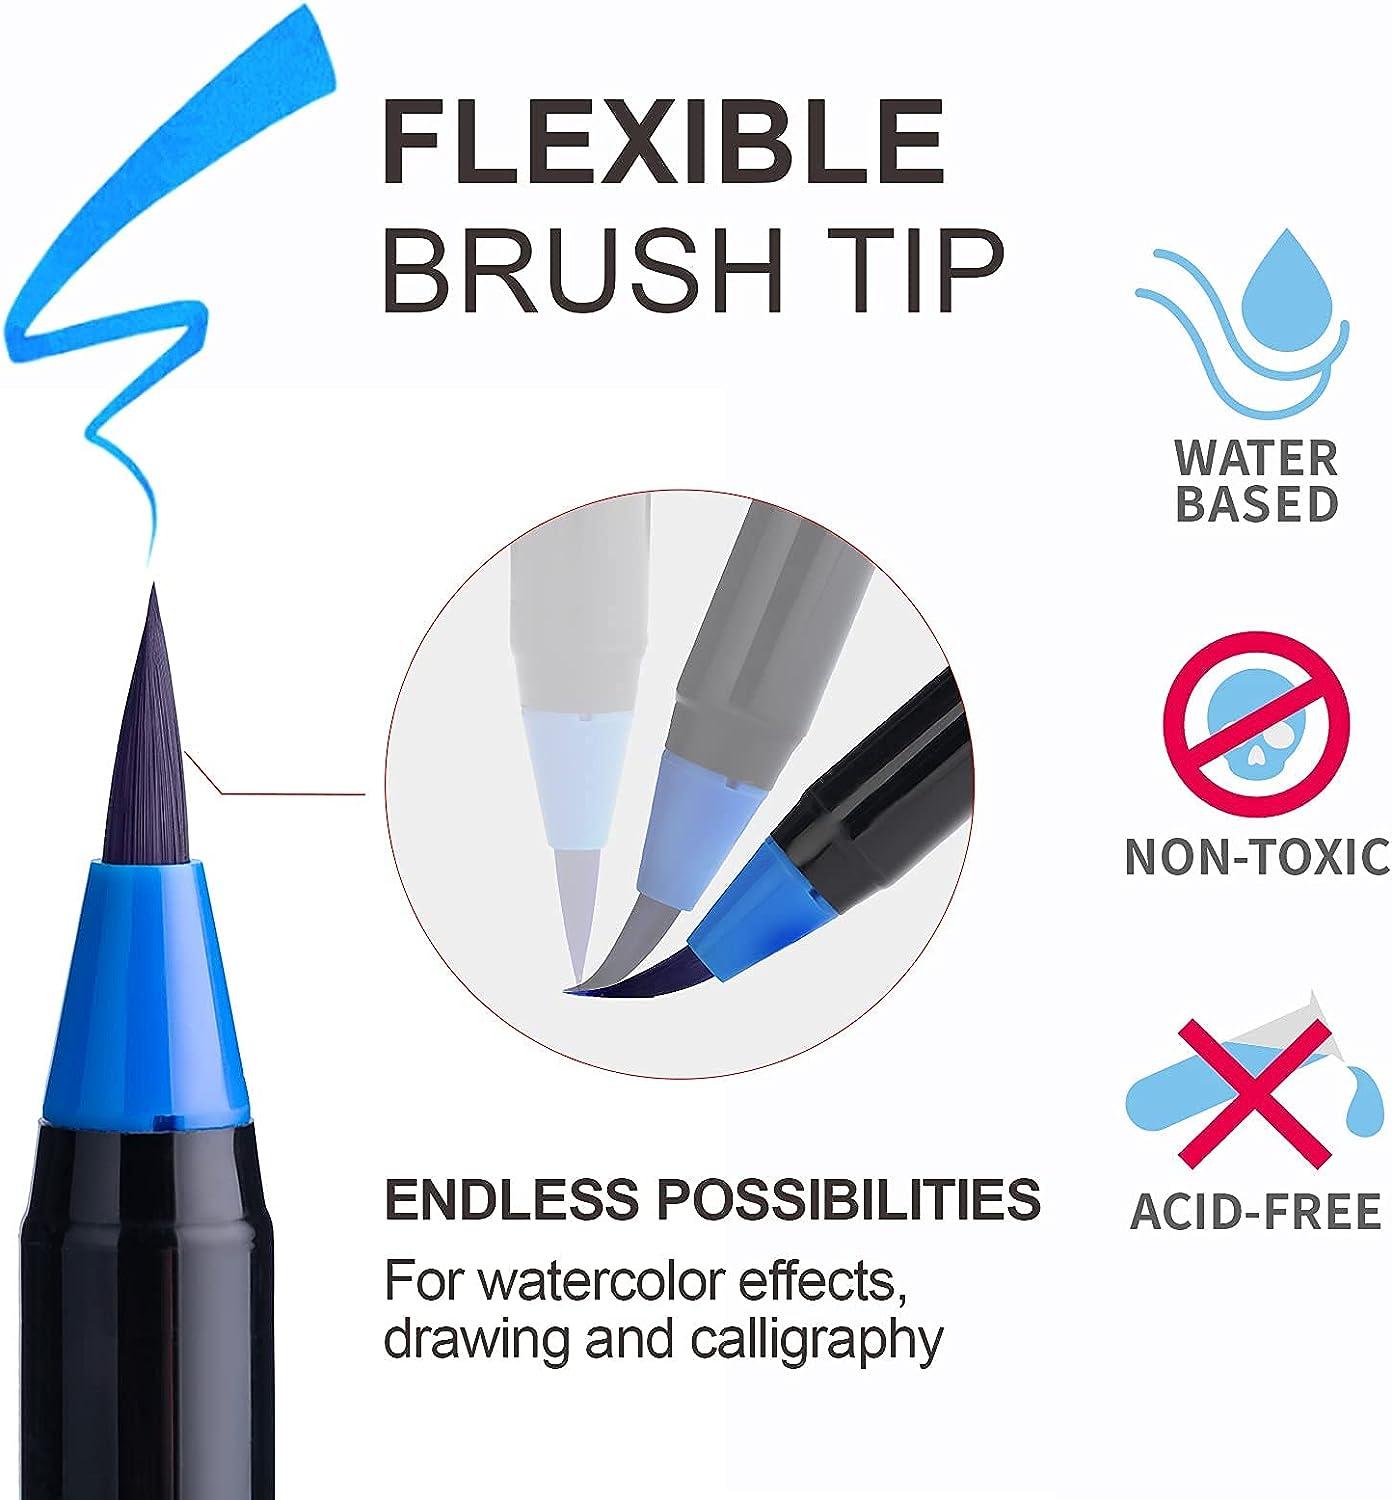 Net Focus Media Watercolor Brush Pens – Includes 24 Colorful